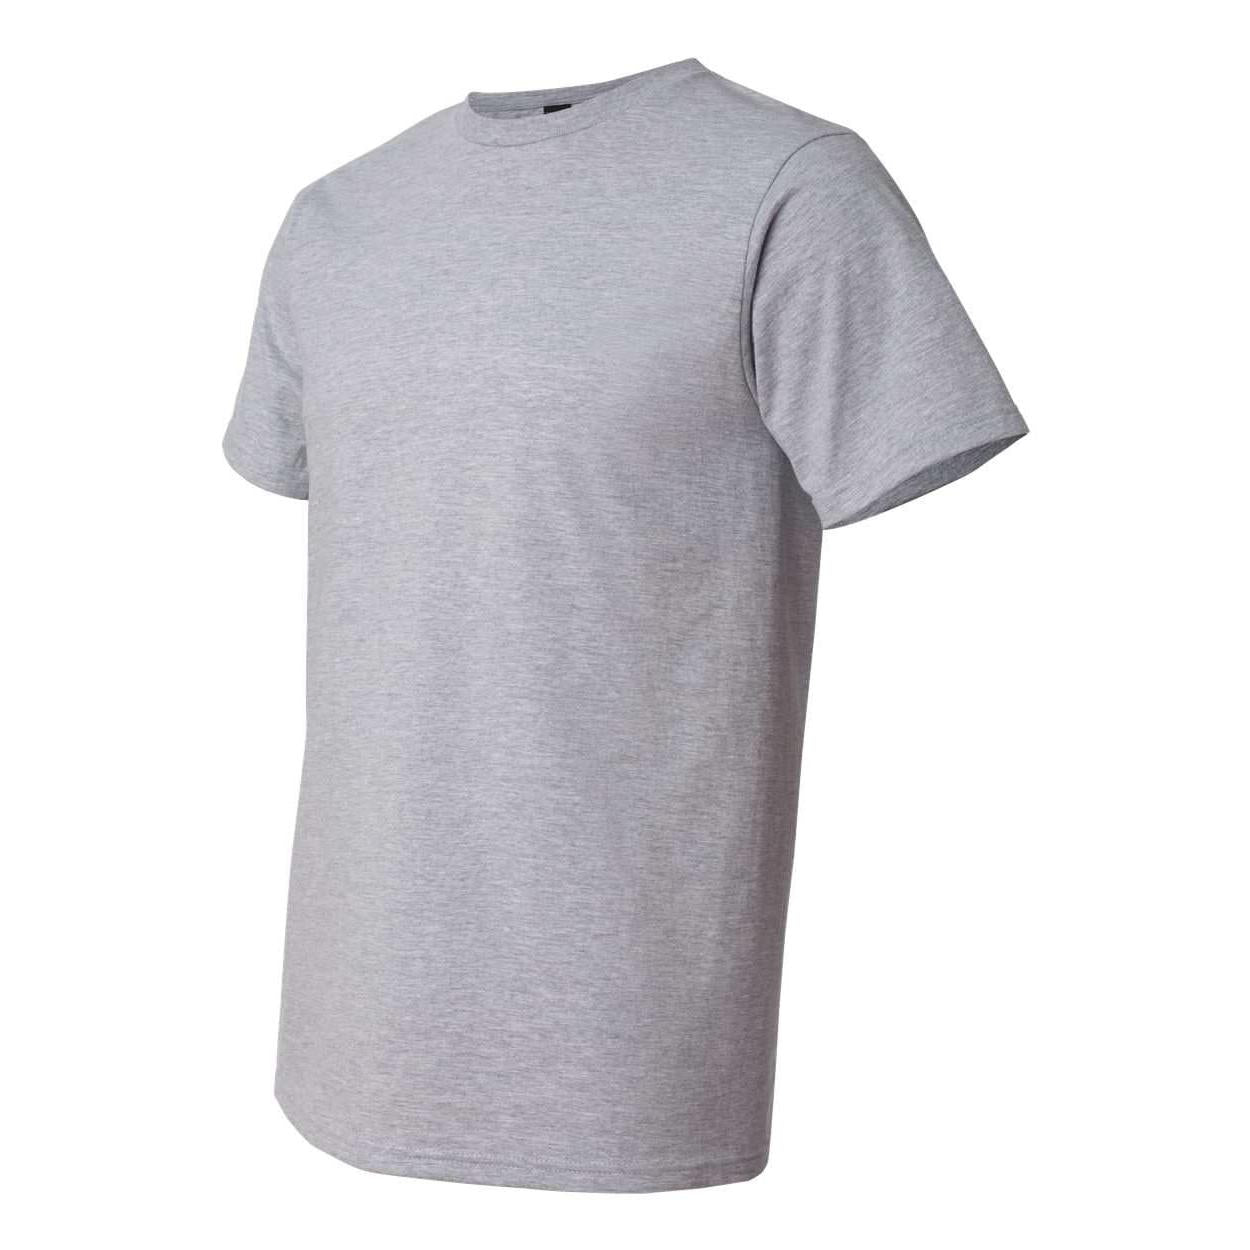 Graphite Heather Short Sleeve T-Shirt - Gray